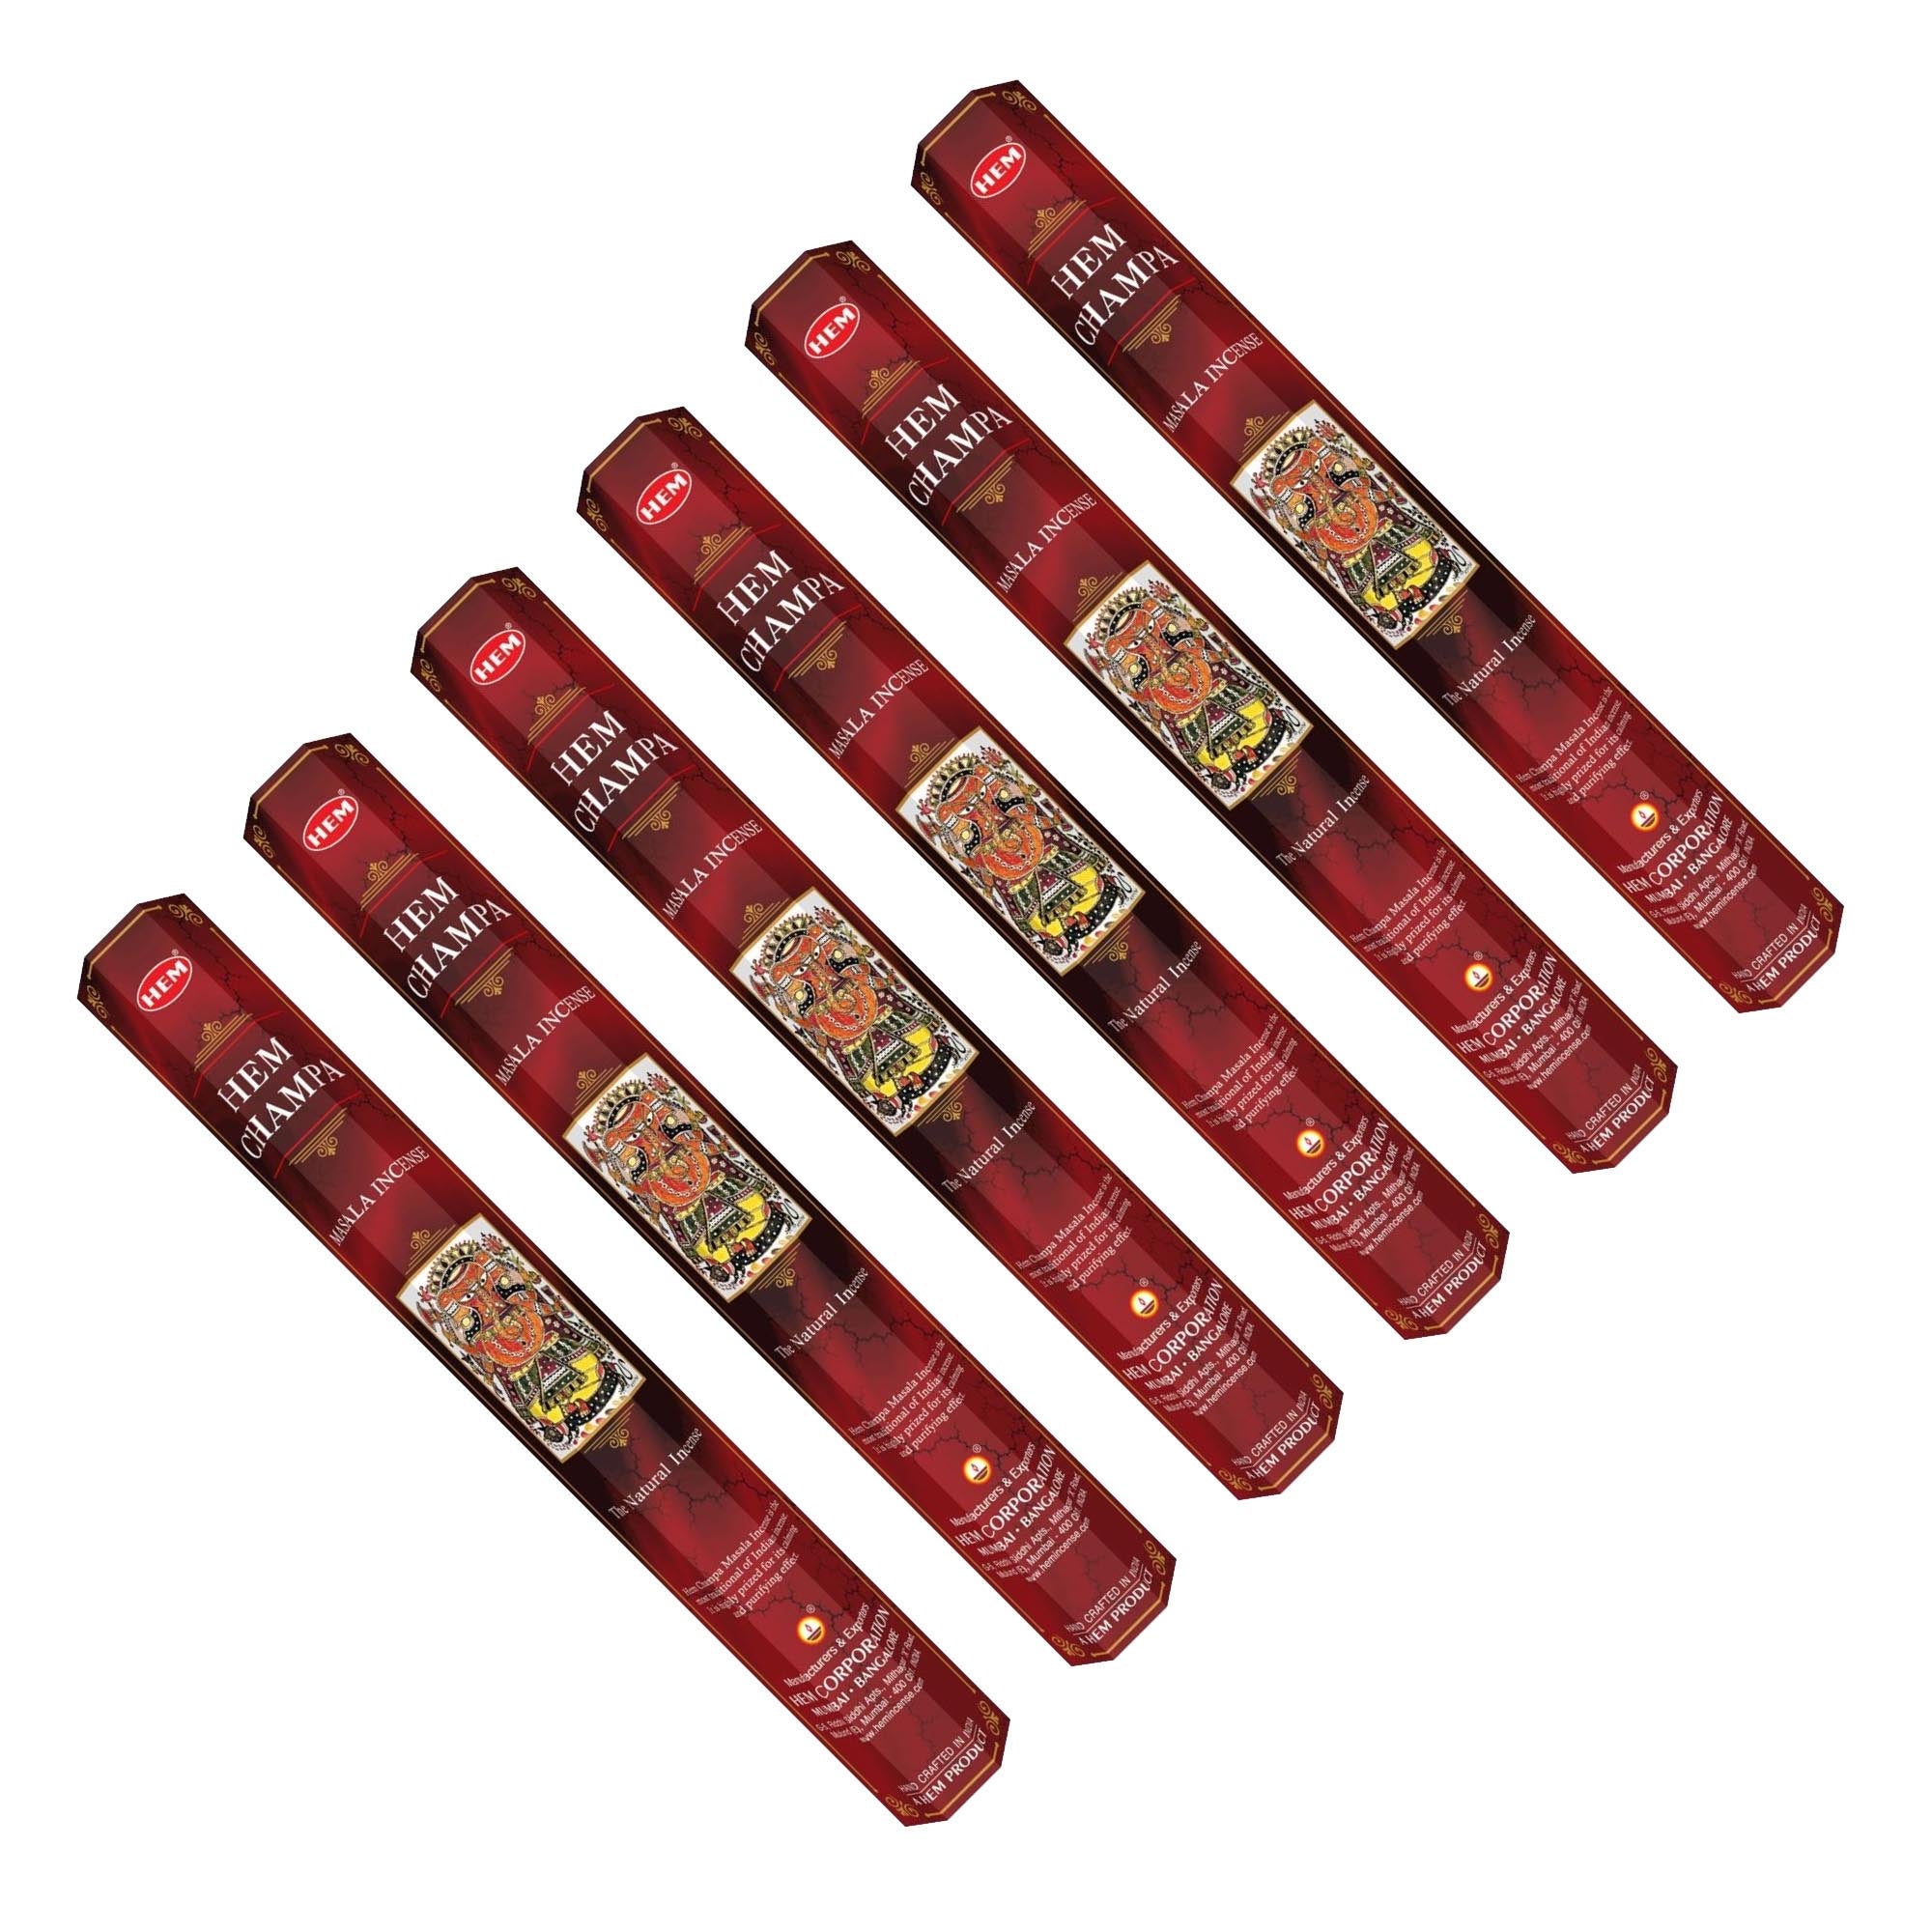 HEM - Hexagon - Hem Champa Incense Sticks